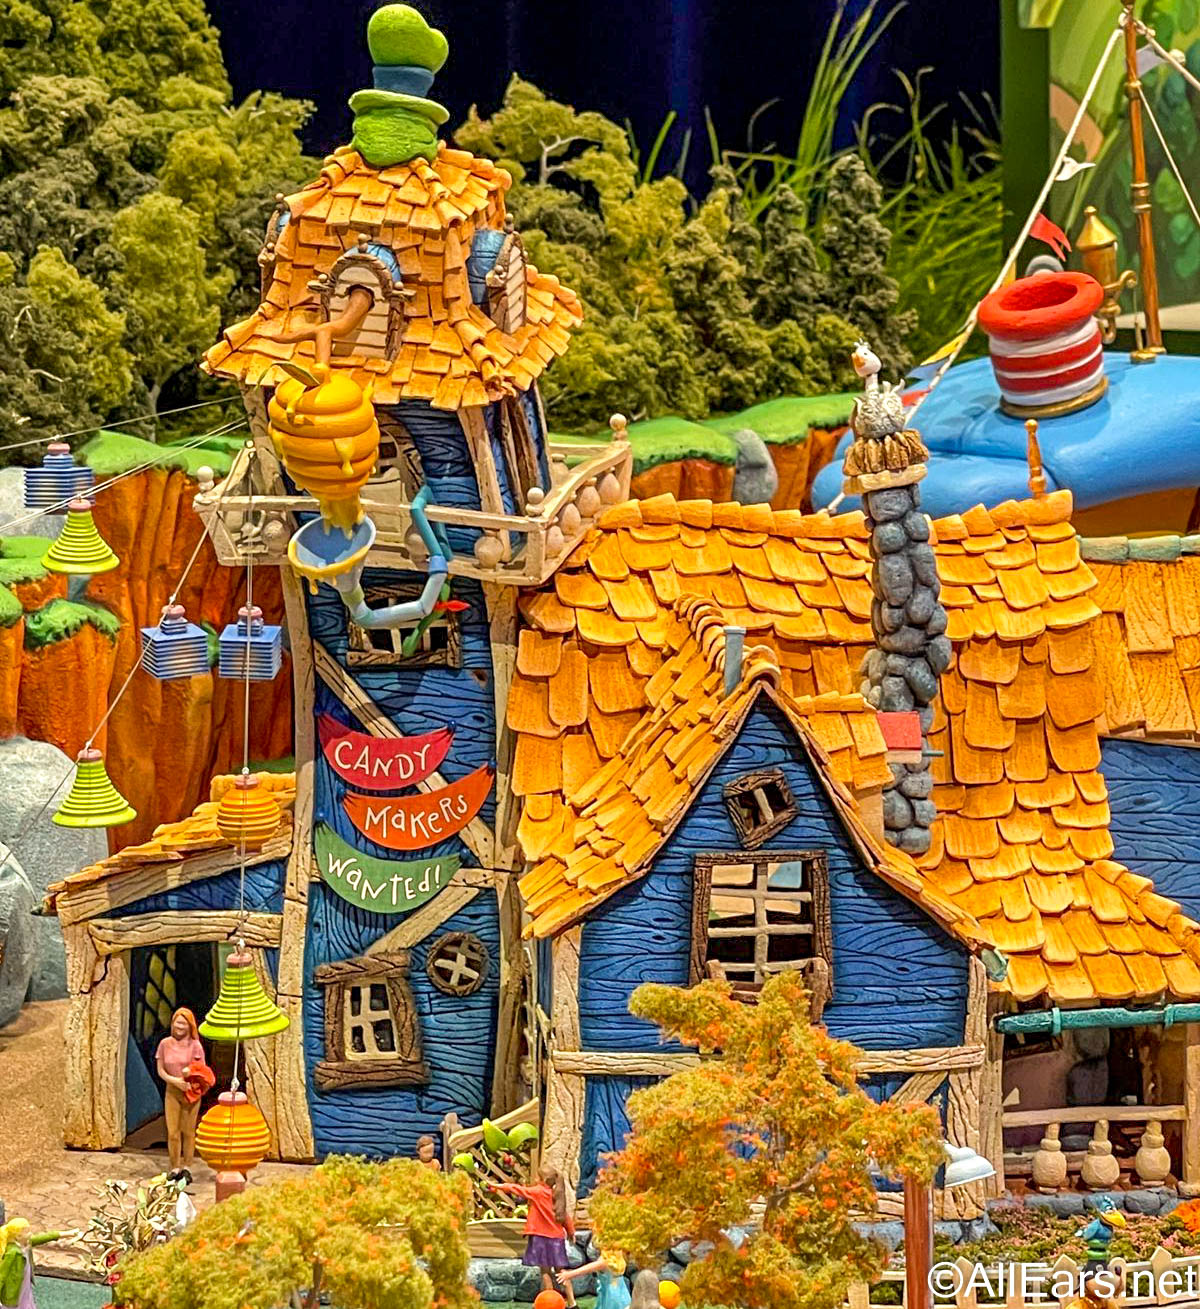 Sneak Peek Inside Reimagined Mickey's Toontown Including Minnie's